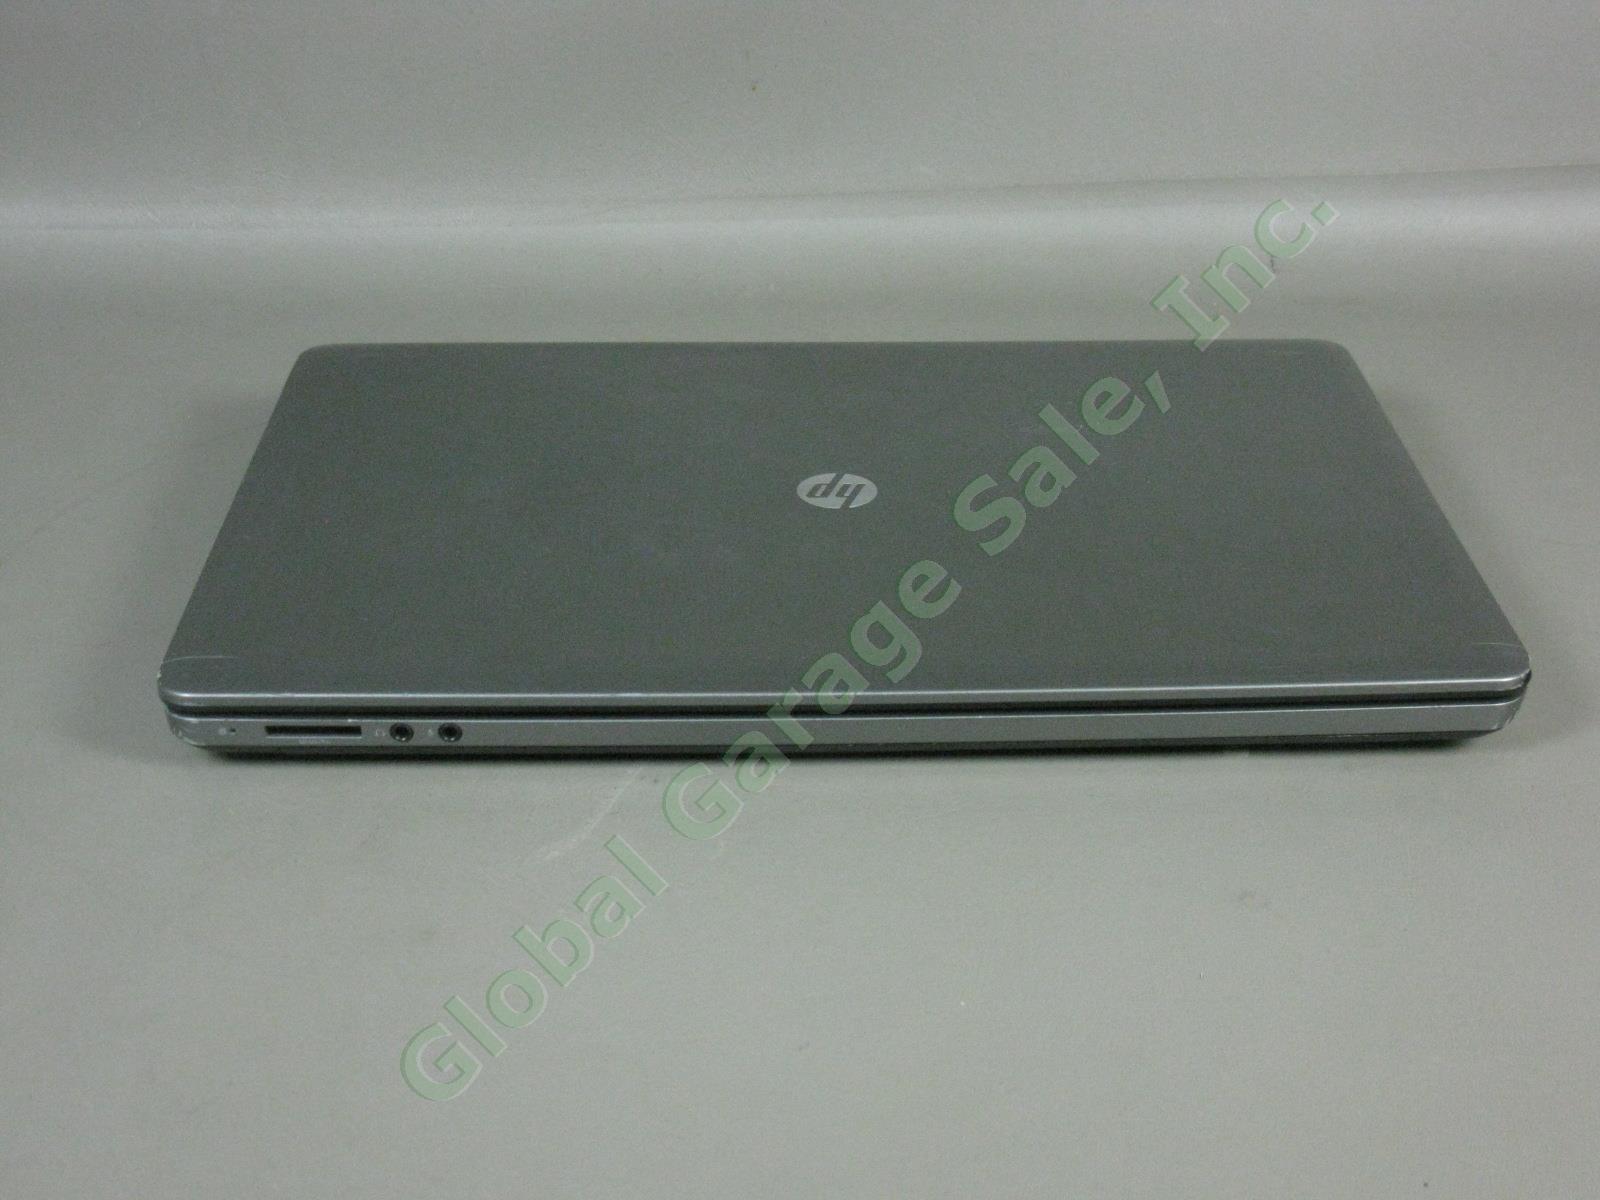 HP ProBook 4540s Laptop Intel i3 2.40GHz 500GB HDD 4GB RAM Win 10 Works Great! 3